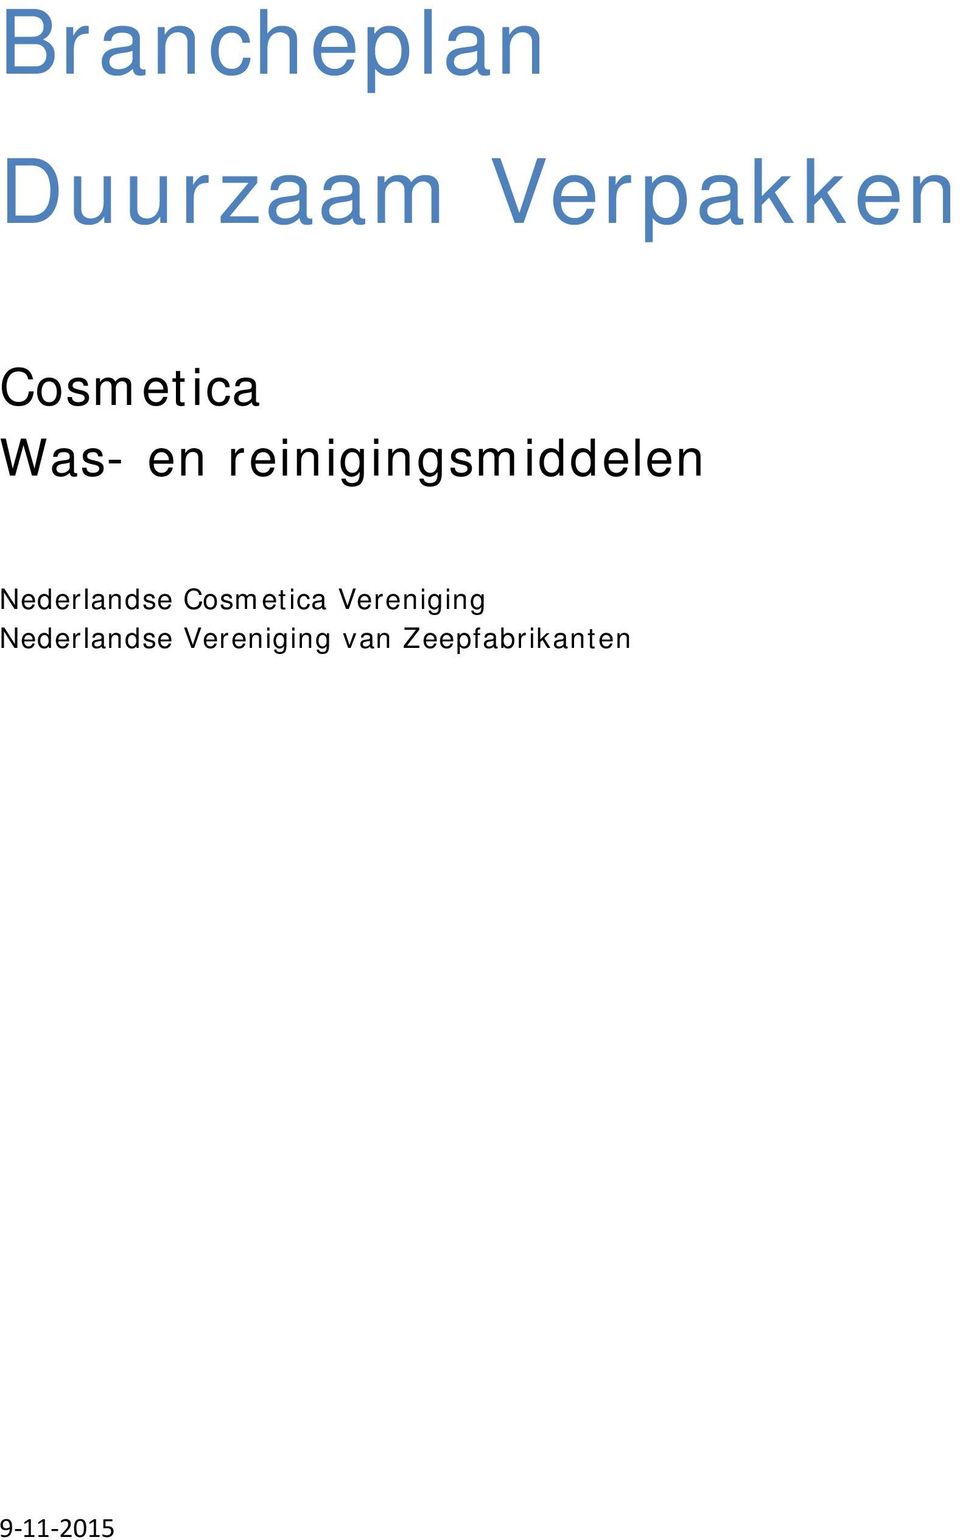 Nederlandse Cosmetica Vereniging